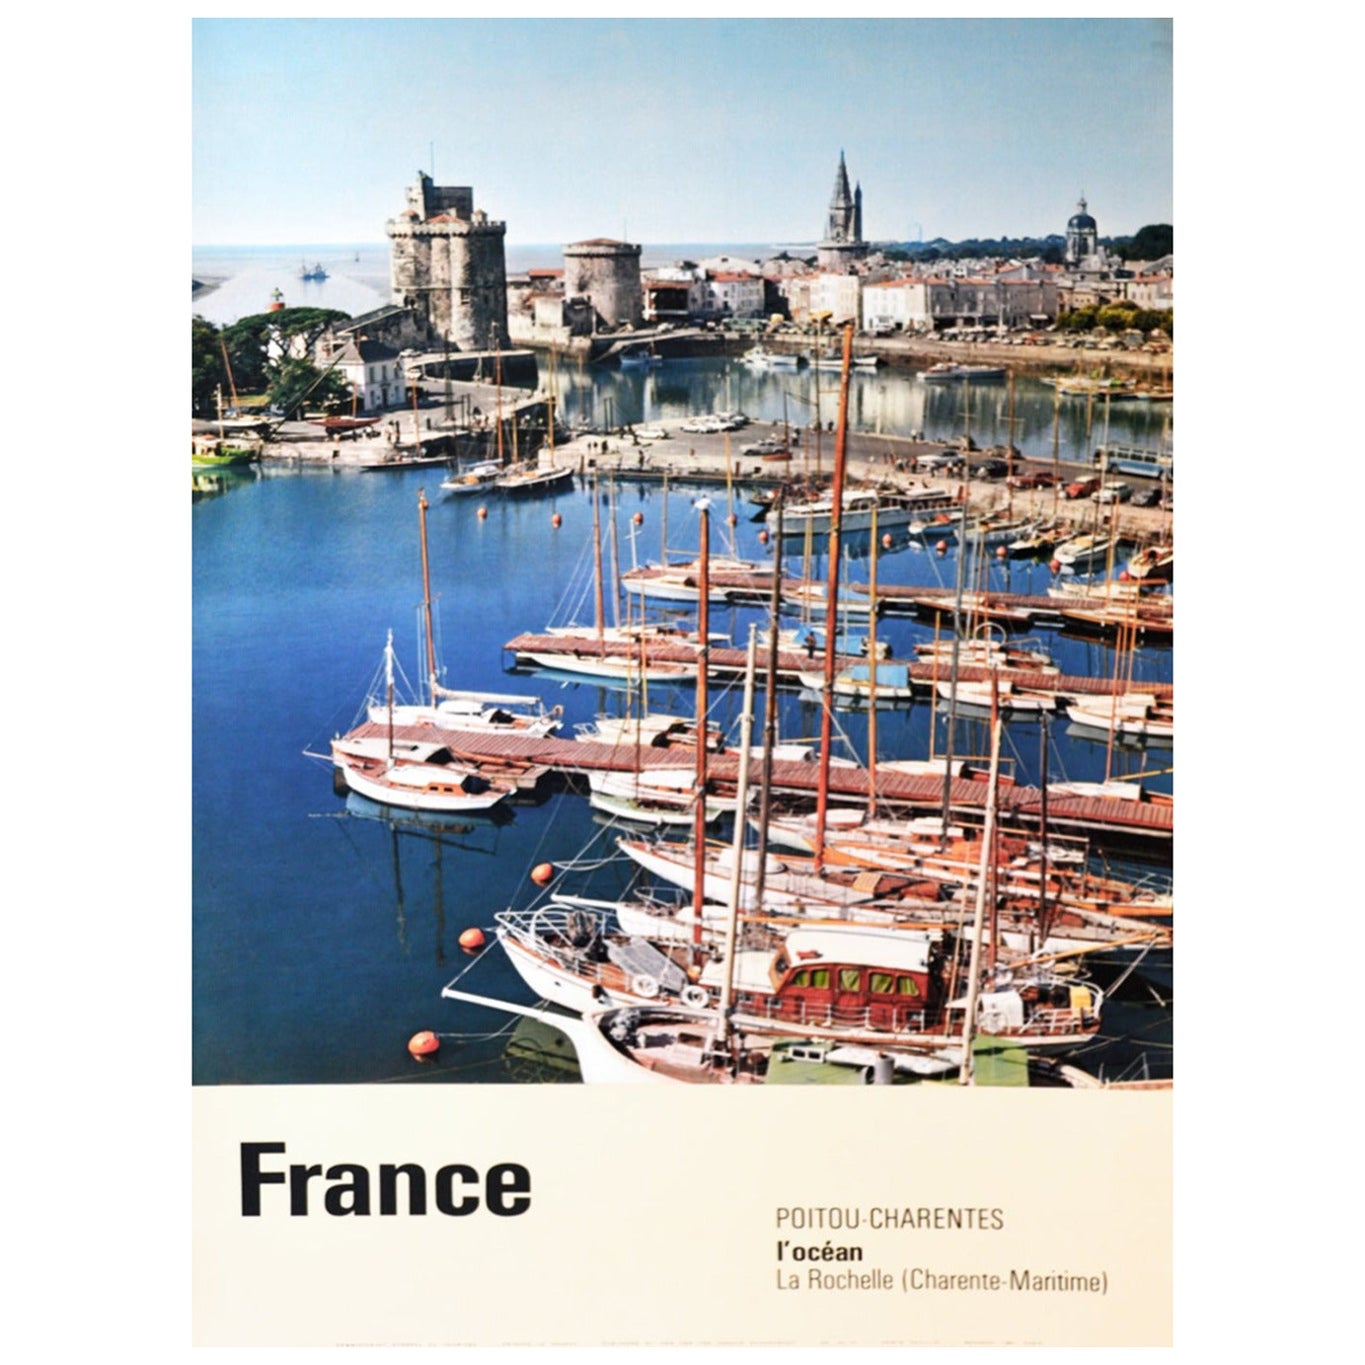 1963 France Poitou Charentes Original Vintage Poster For Sale